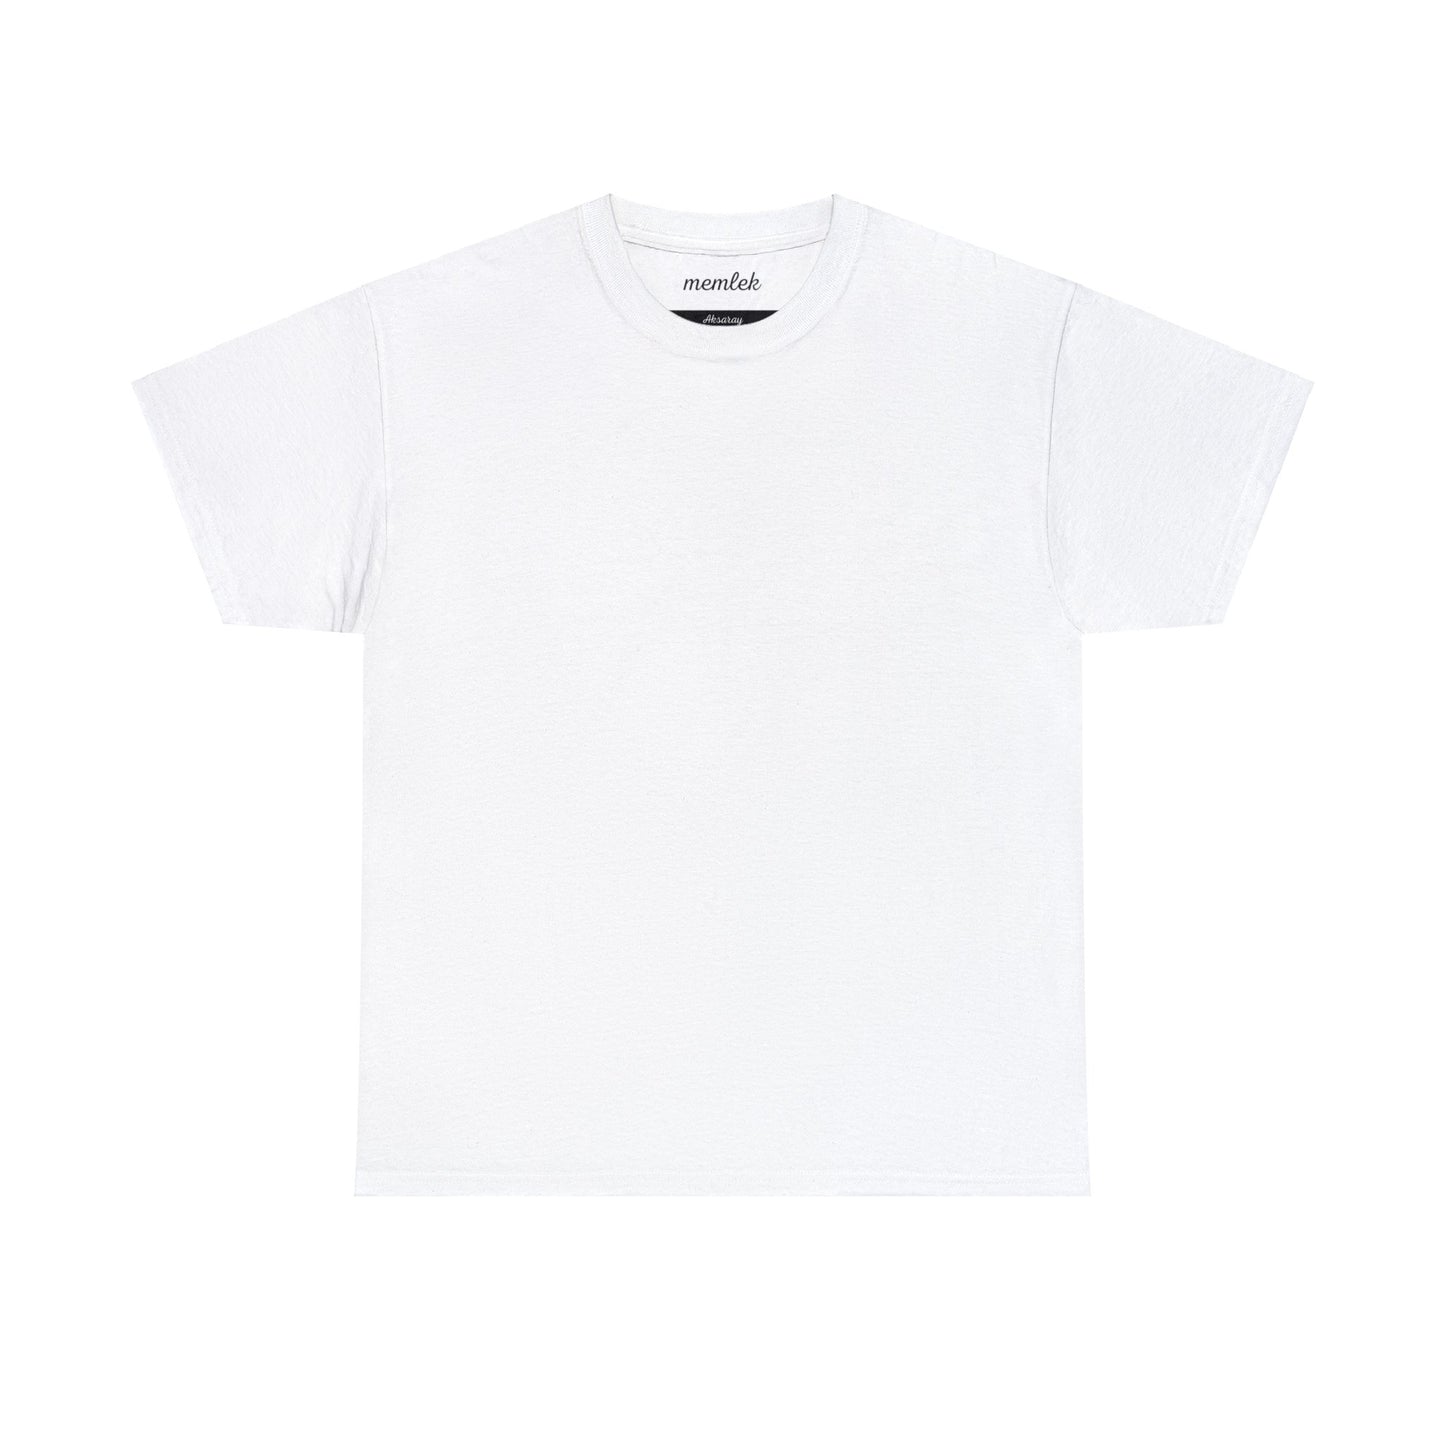 Kurt - 68 Aksaray - T-Shirt - Back Print - Black/White